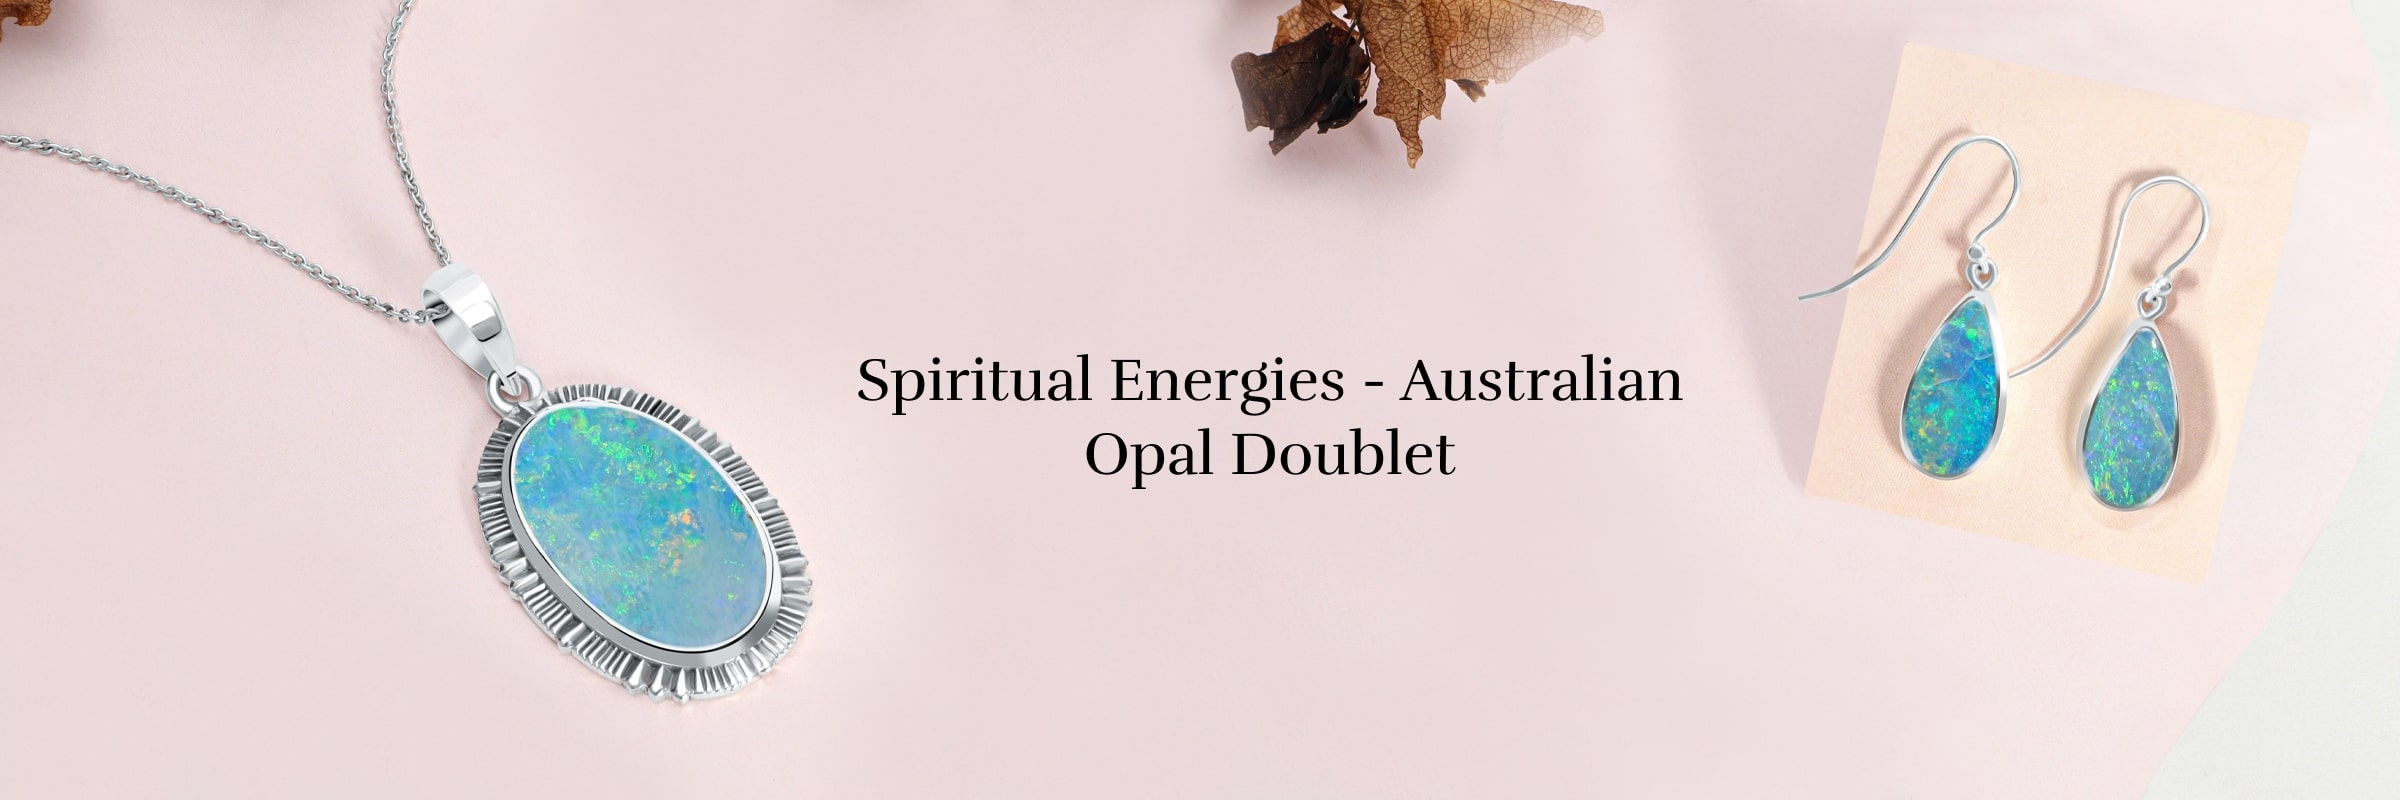 Australian Doublet Opal Metaphysical Properties